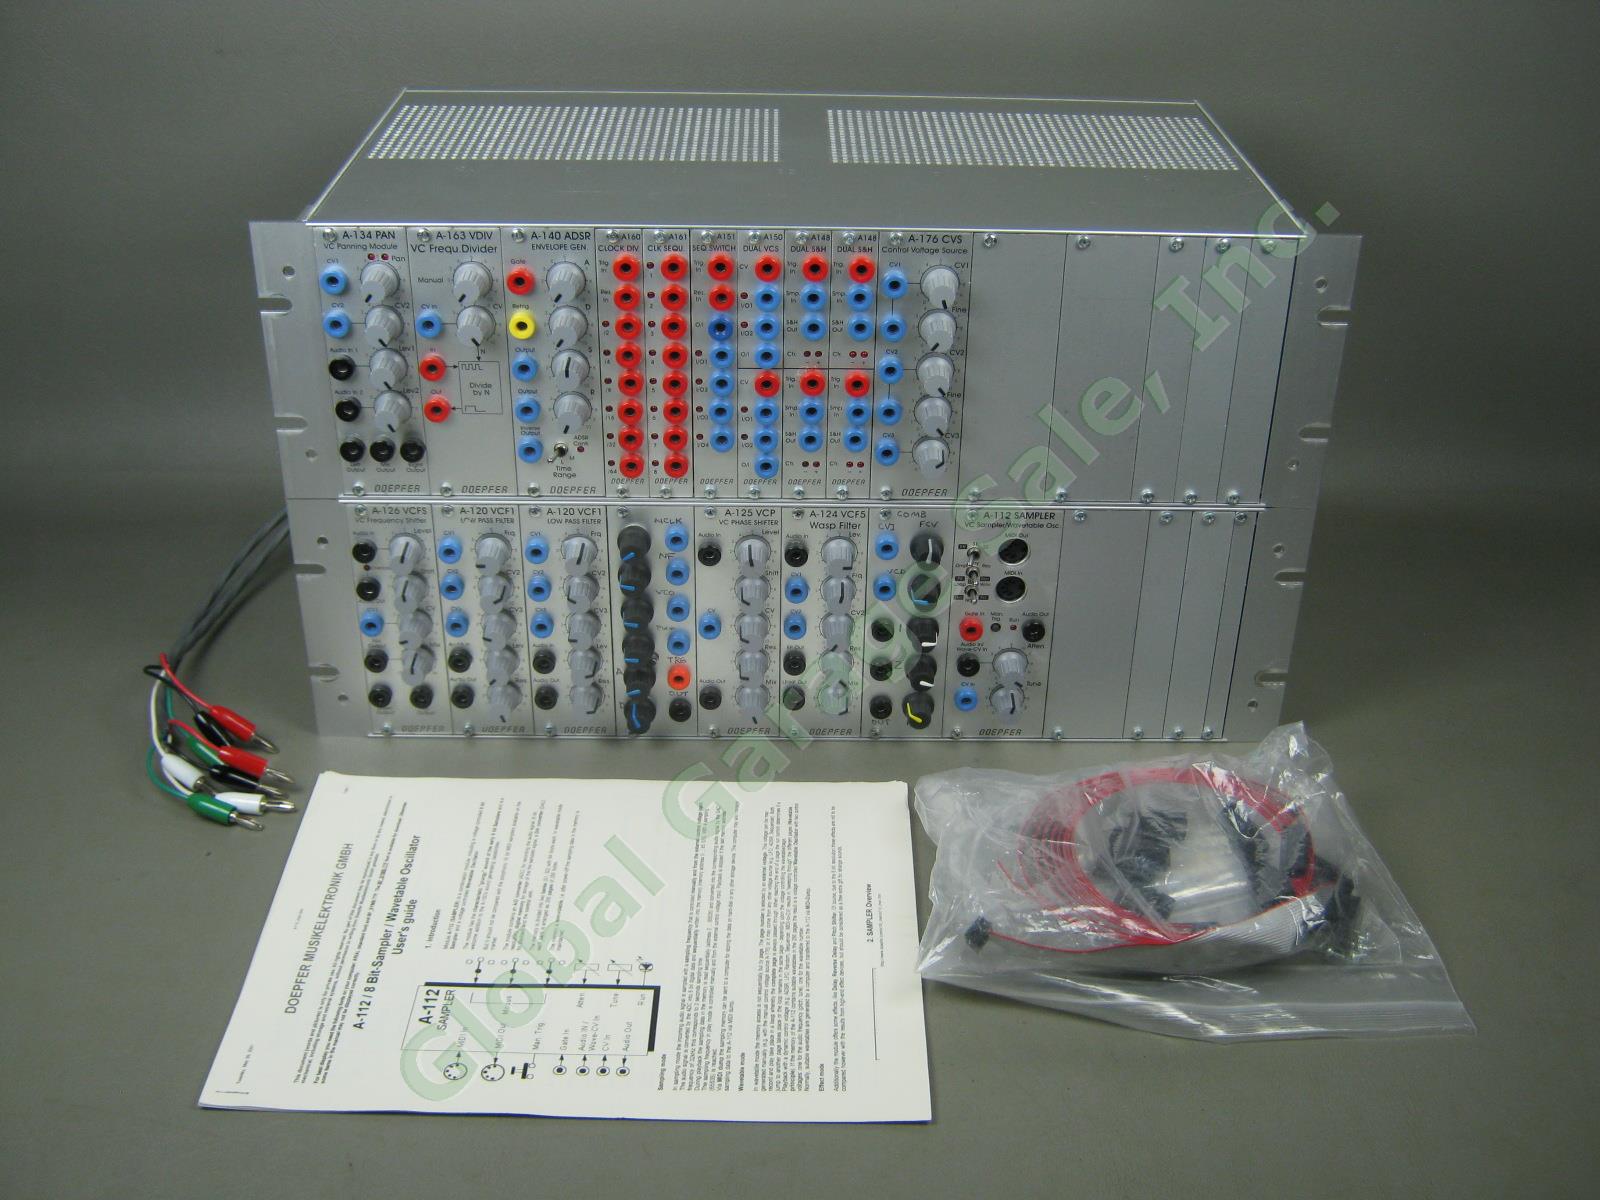 Doepfer Modular Analog Synth System A-100G6 Rack Mount Cabinet + 18 Modules Lot